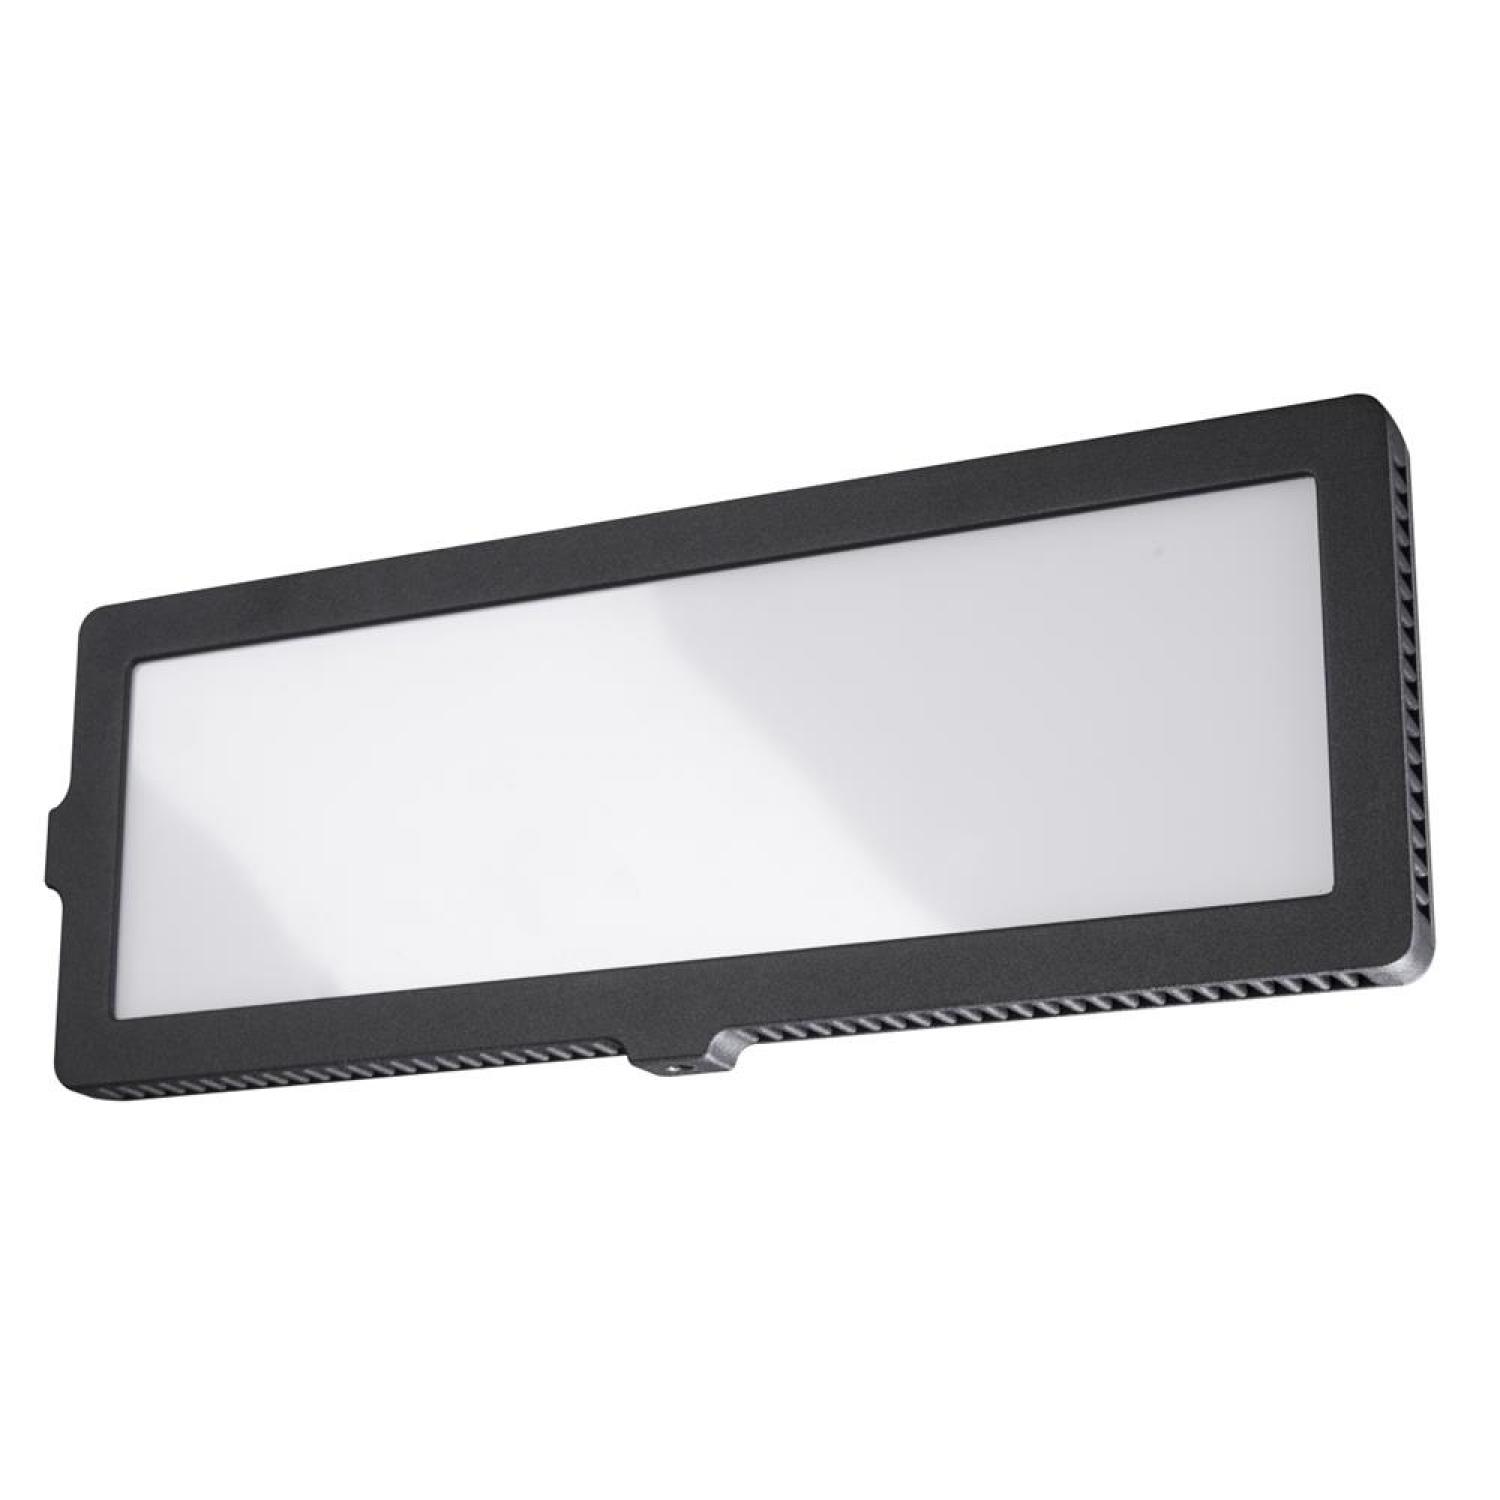 Walimex Pro Soft LED 200 Flat Daylight weiches Fotolicht Videolicht 16W 20618